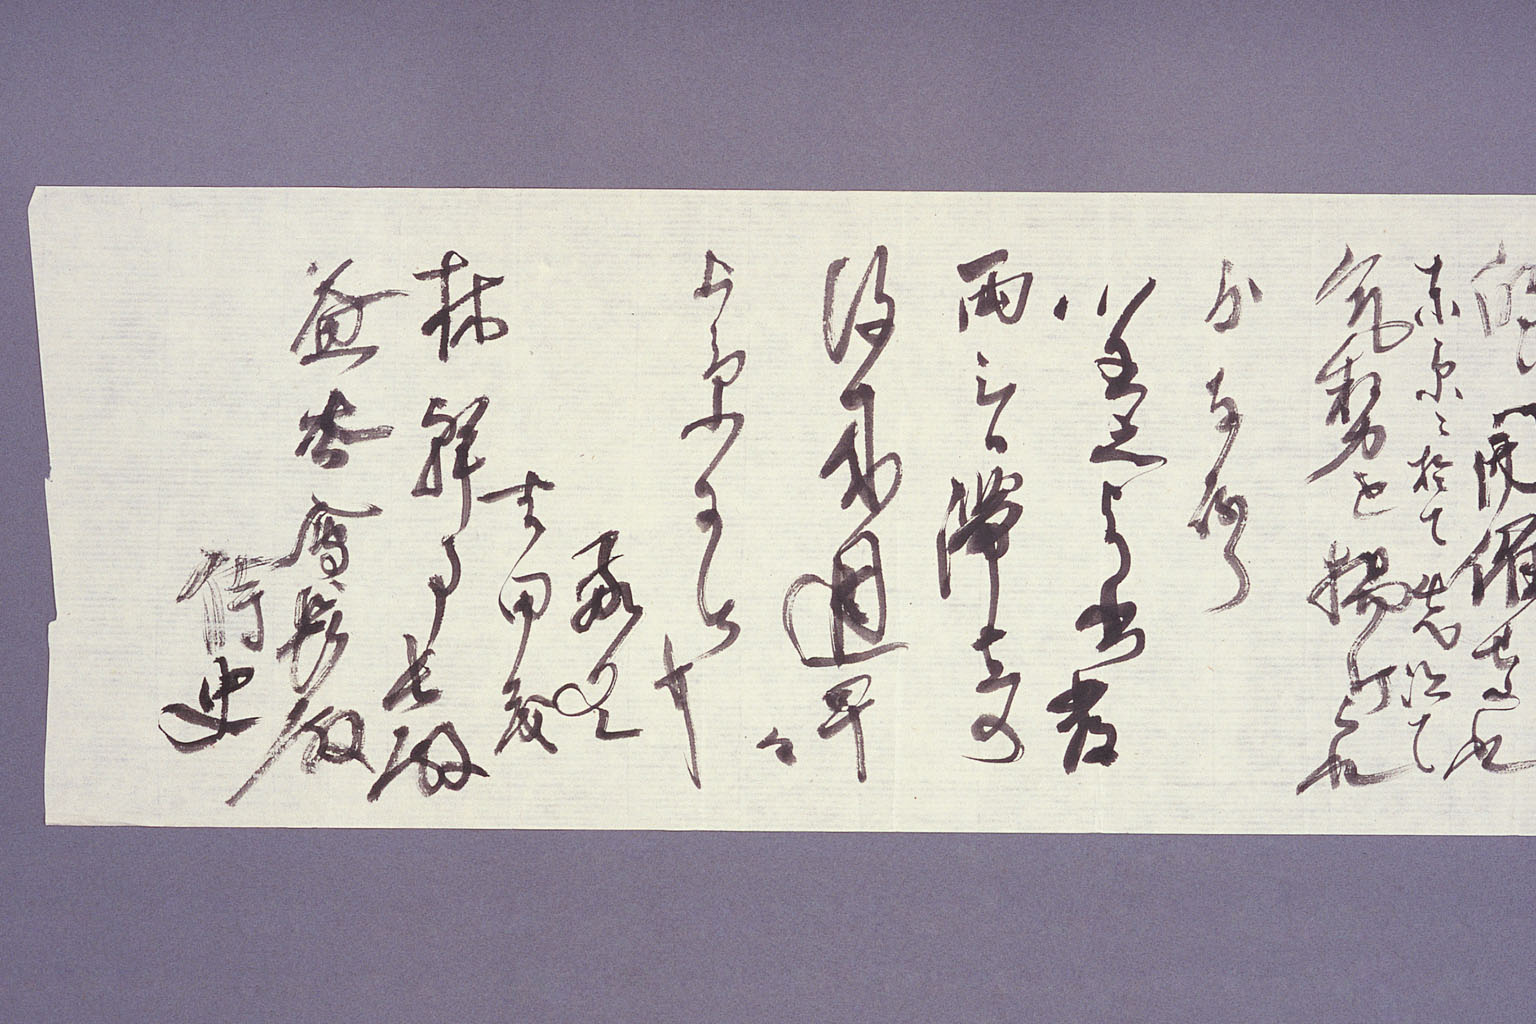 Letter from YOSHIDA Shigeru to HAYASHI Joji  and MASUTANI Shuji (larger)